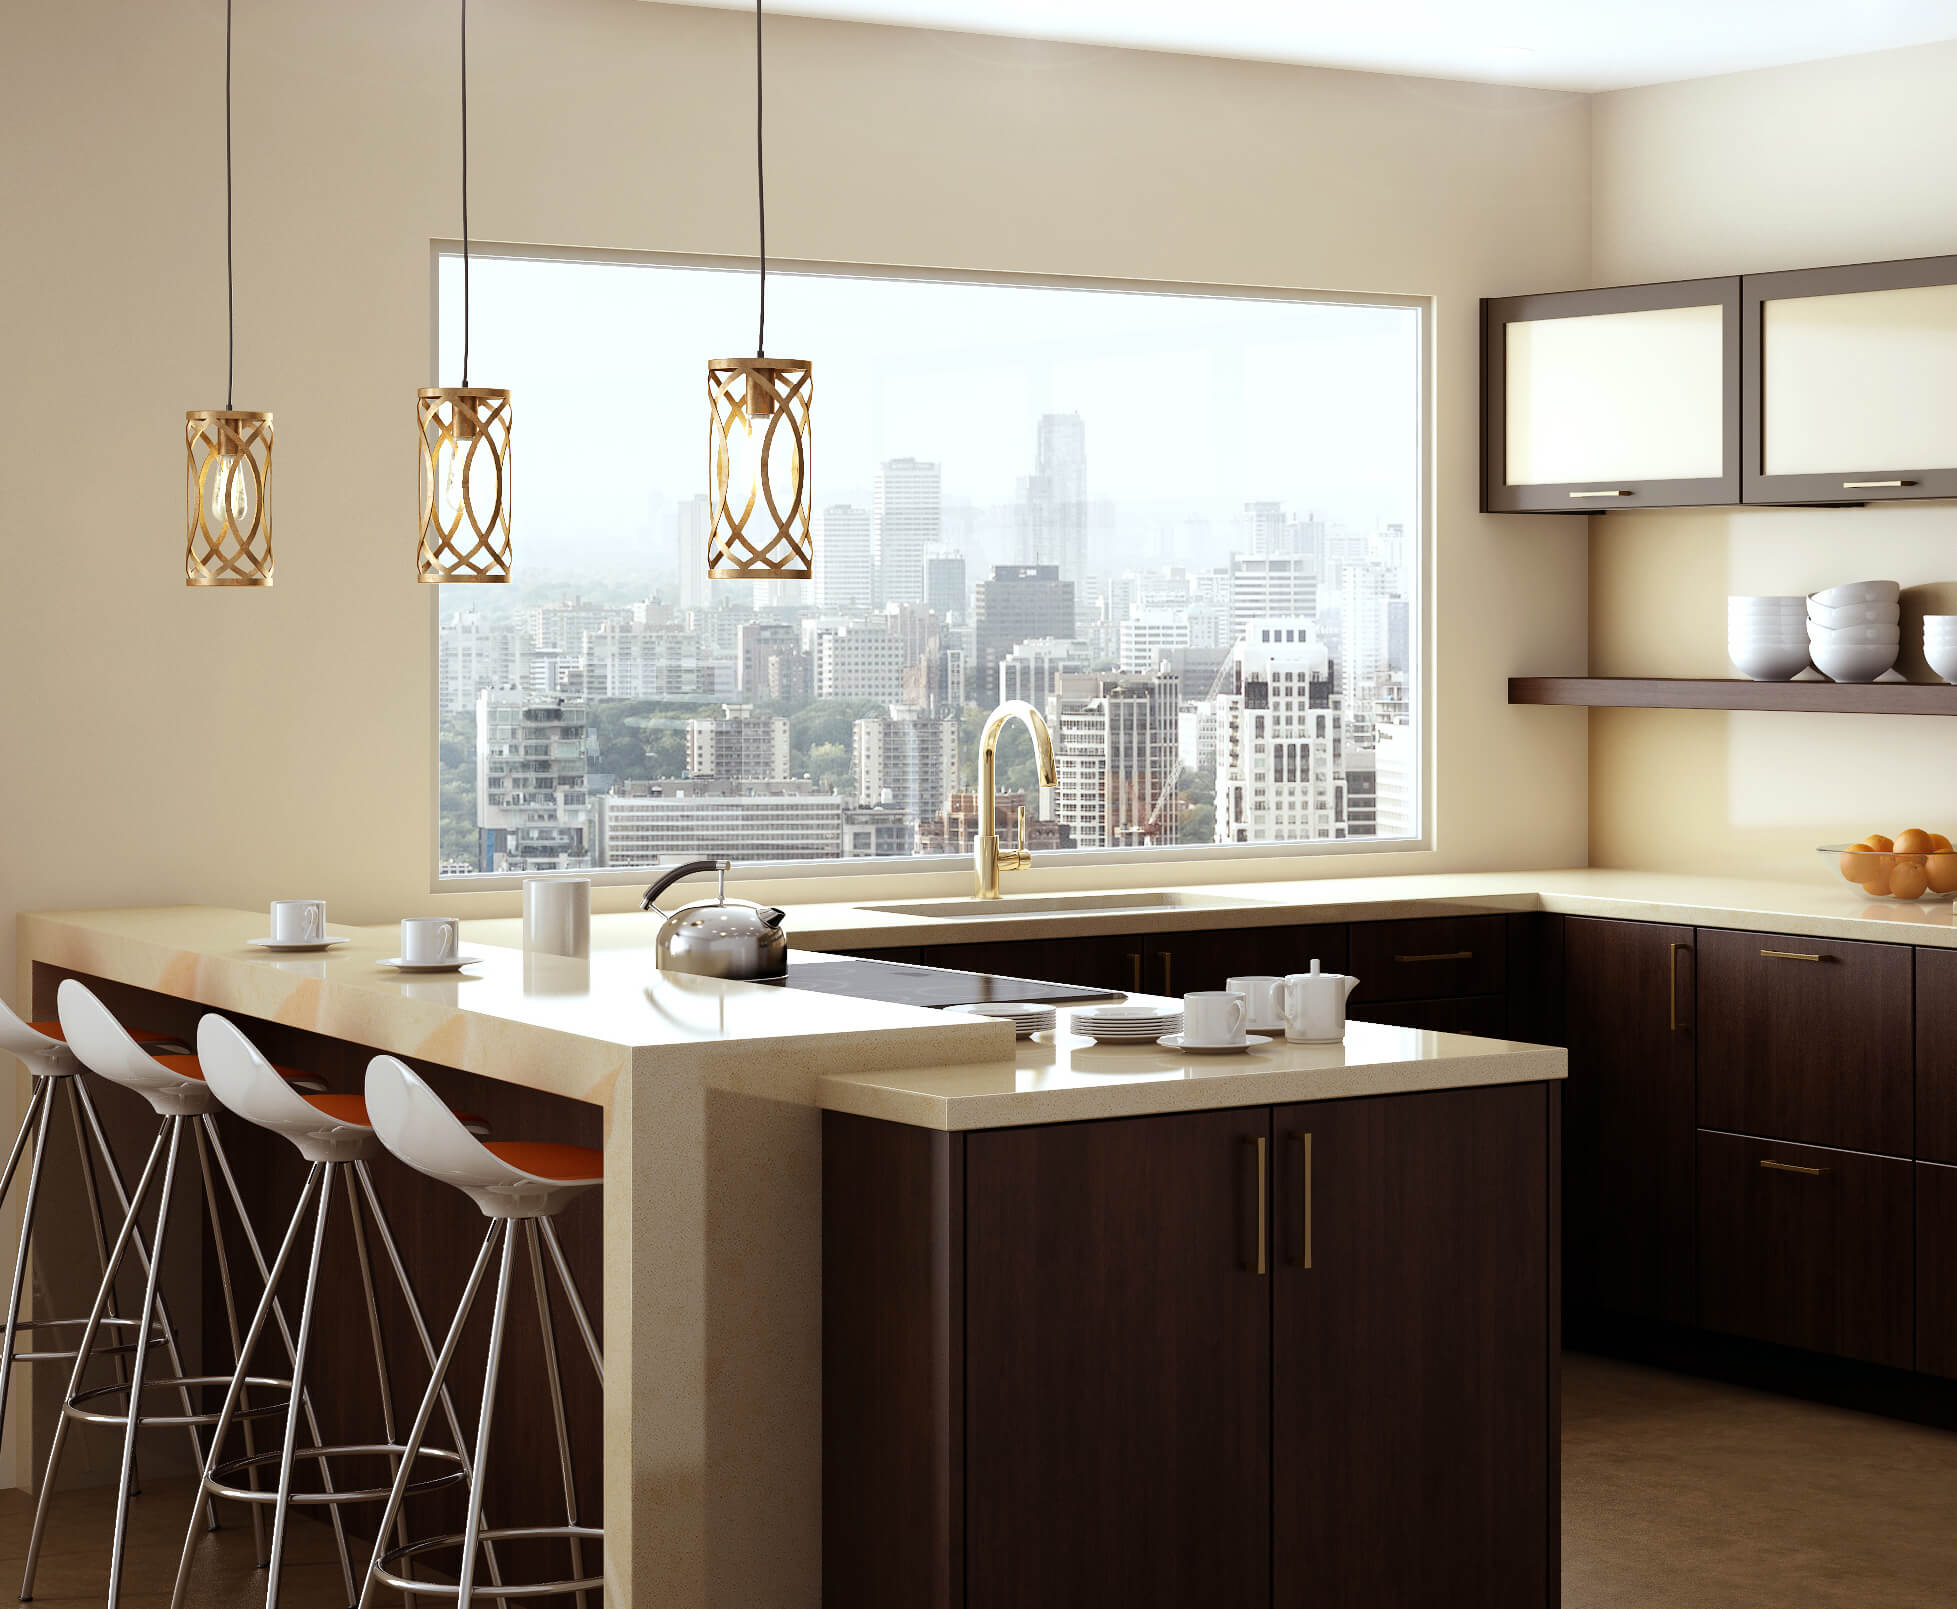 Pendant Lights over a kitchen peninsula in a modern urban loft kitchen design.